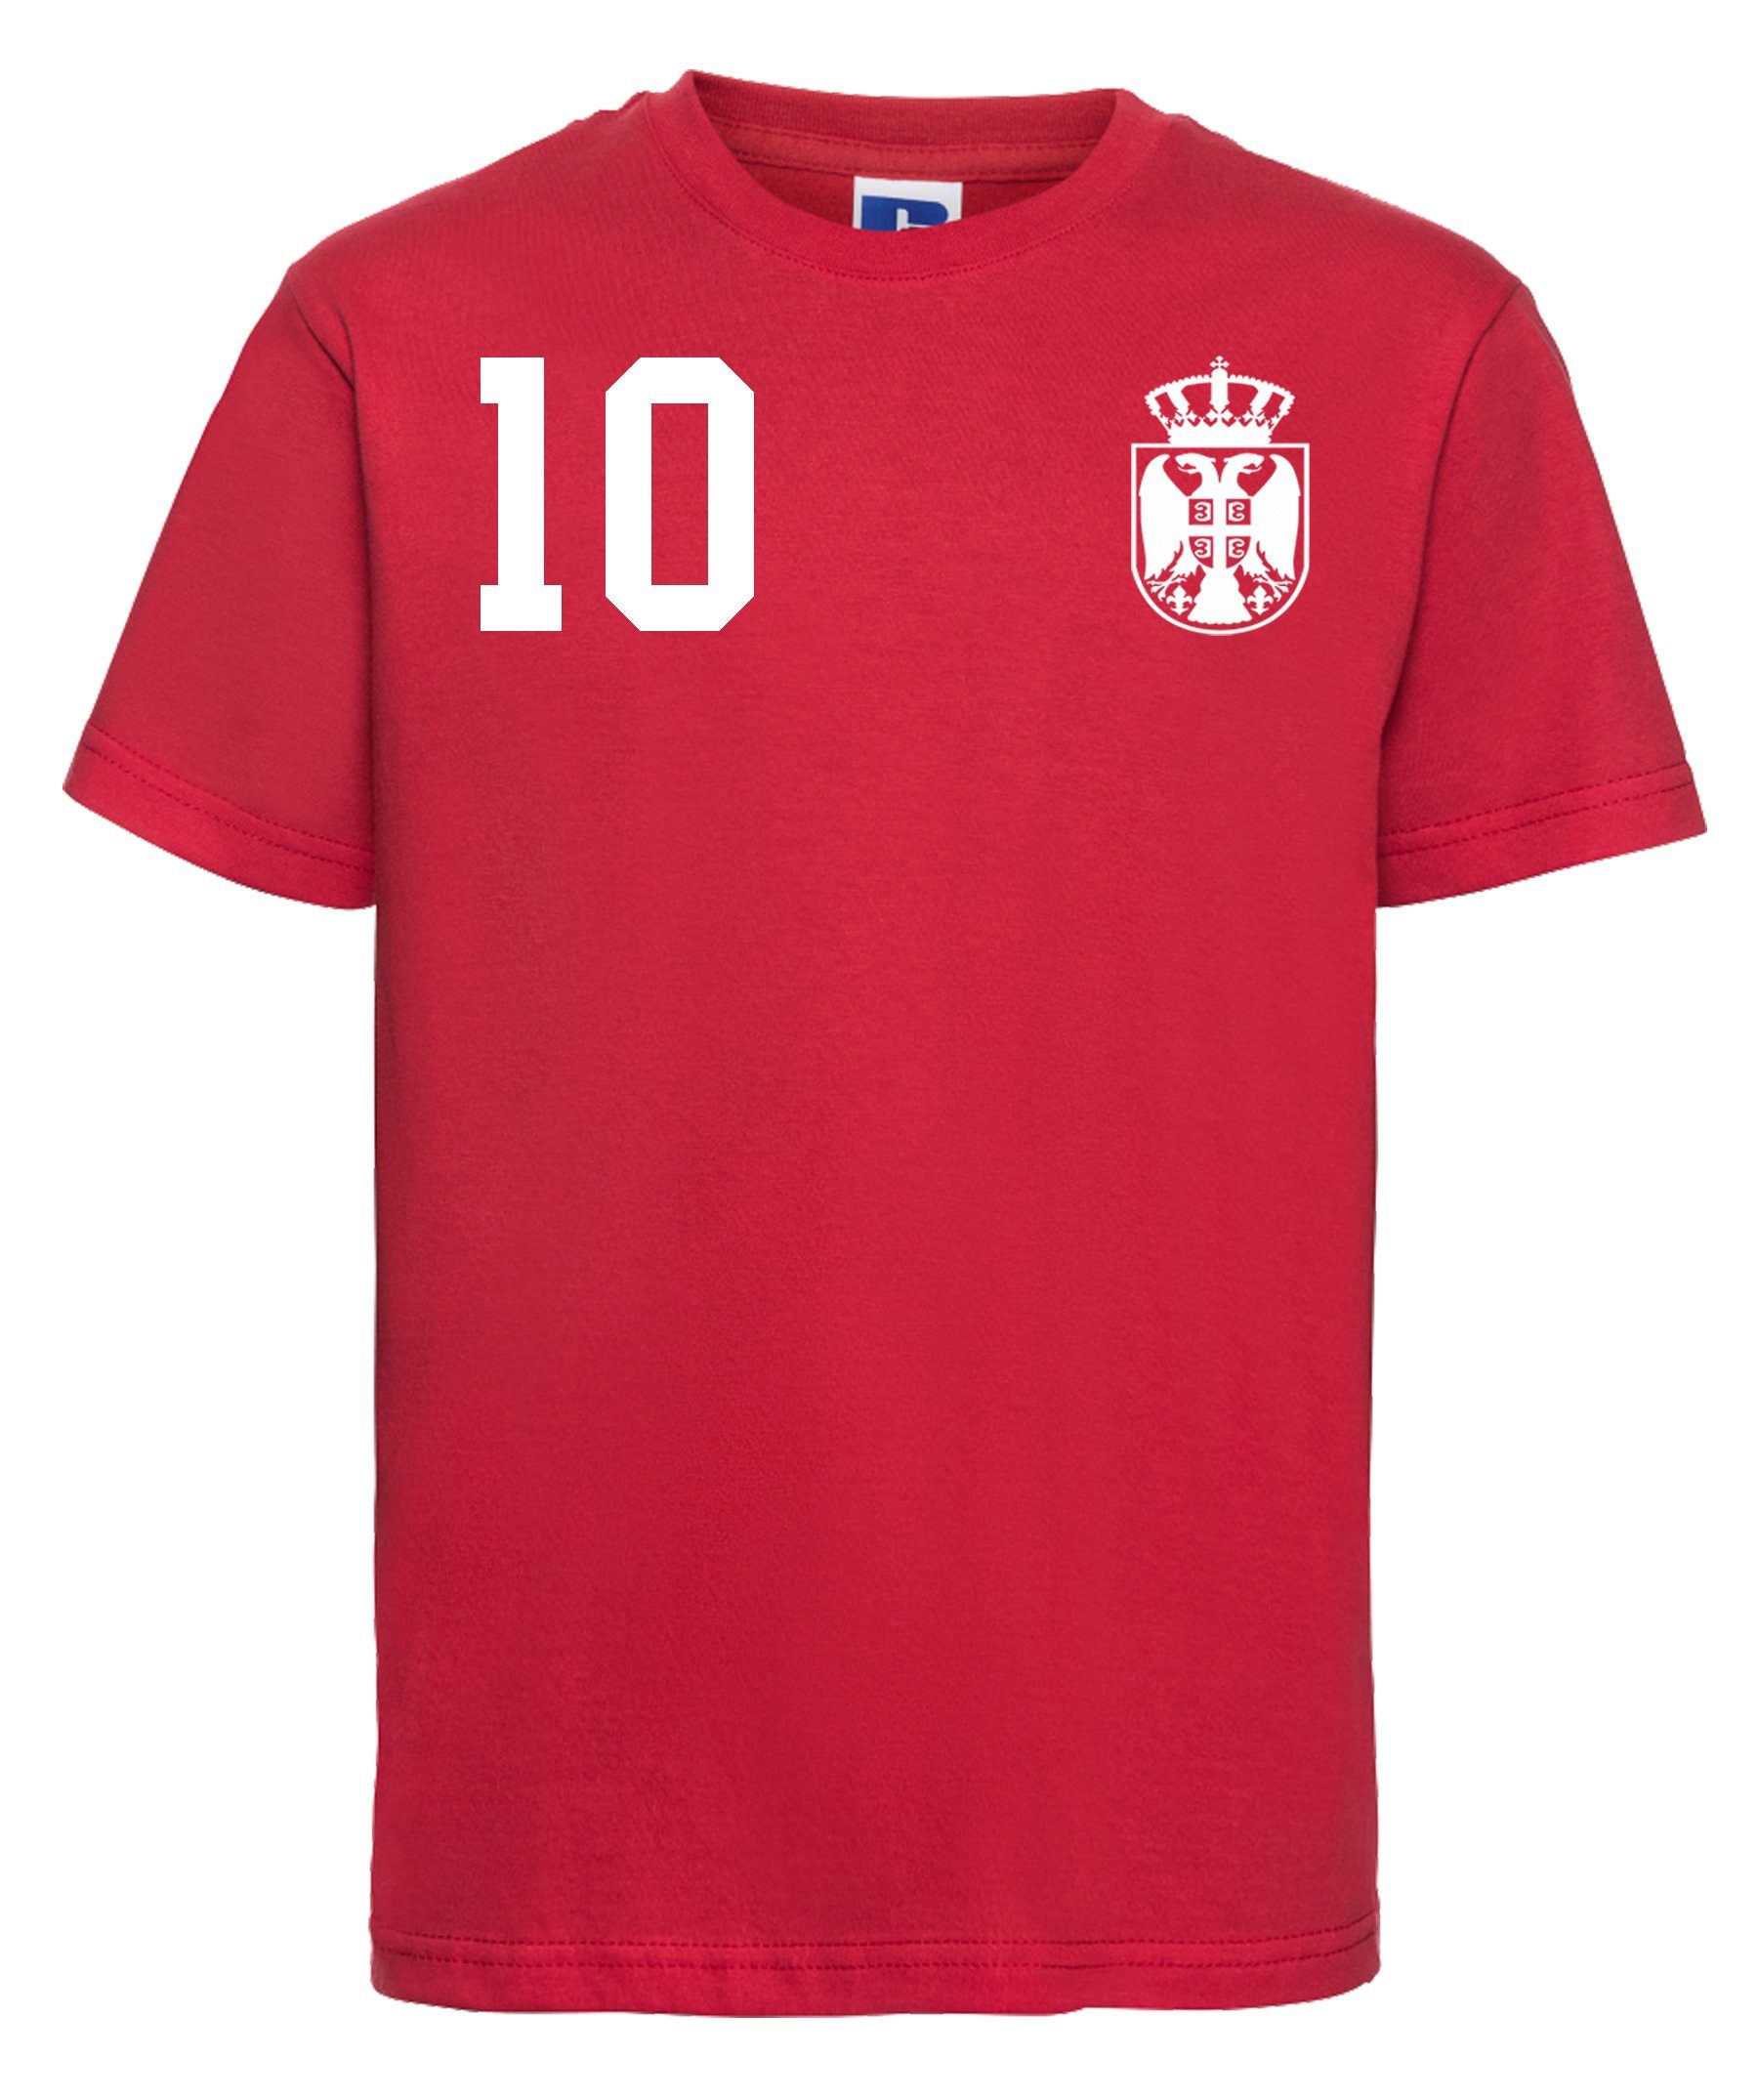 Youth Designz T-Shirt Serbien Kinder T-Shirt im Fußball Trikot Look mit trendigem Motiv Rot